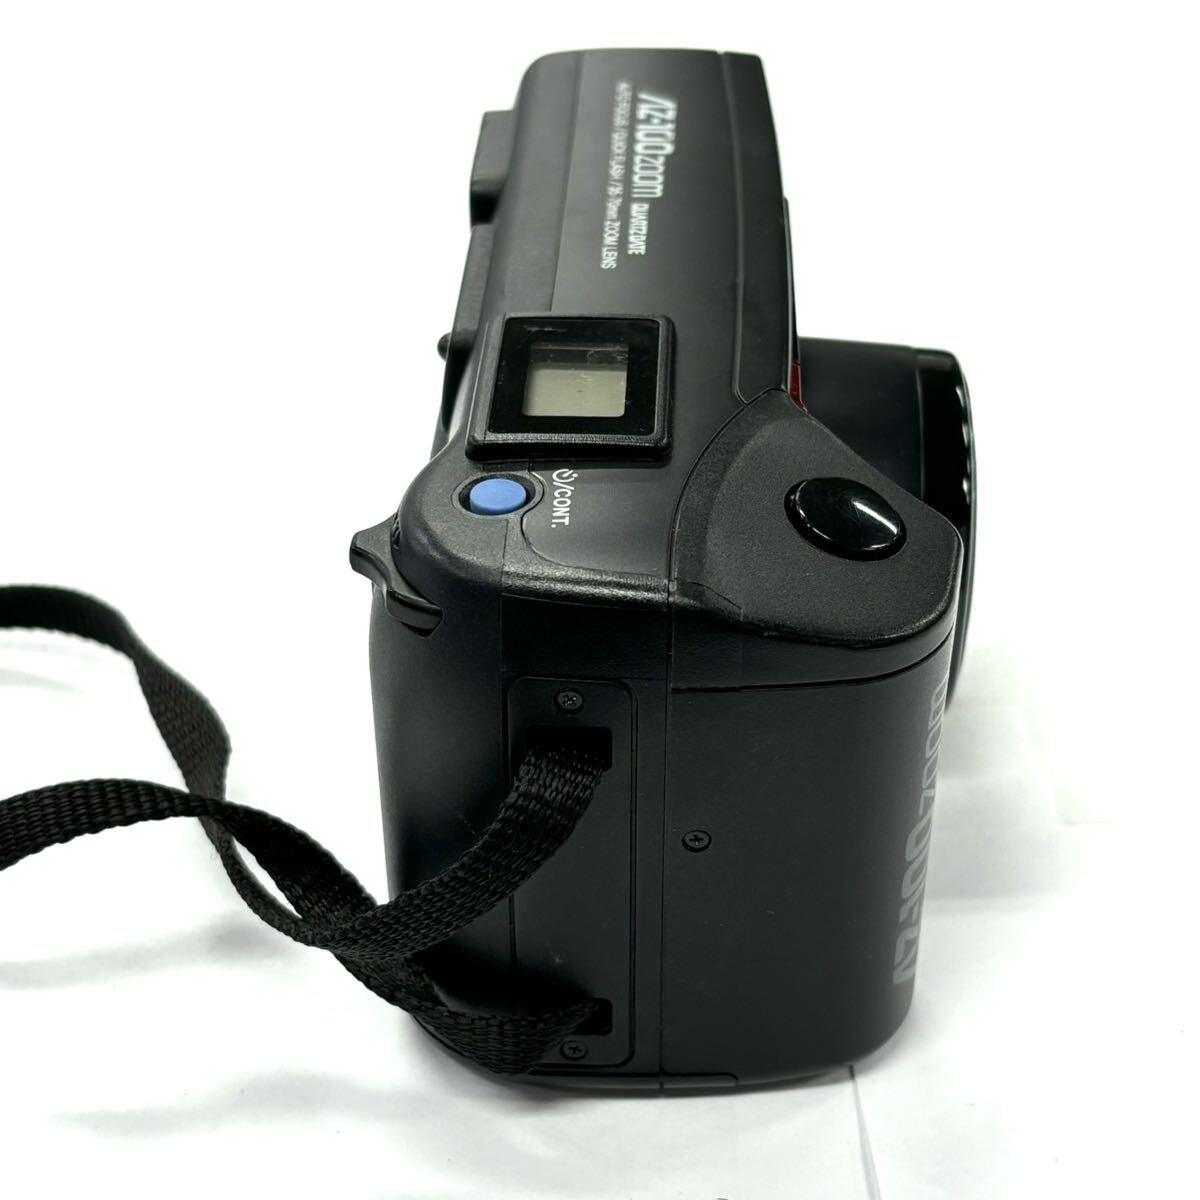 H2815 フィルムカメラ カメラ OLYMPUS オリンパス AZ-100 ZOOM QUARTZDATE AUTO FOCUS/QUICK FLASH / 35-70mm ジャンク品 中古 訳ありの画像7